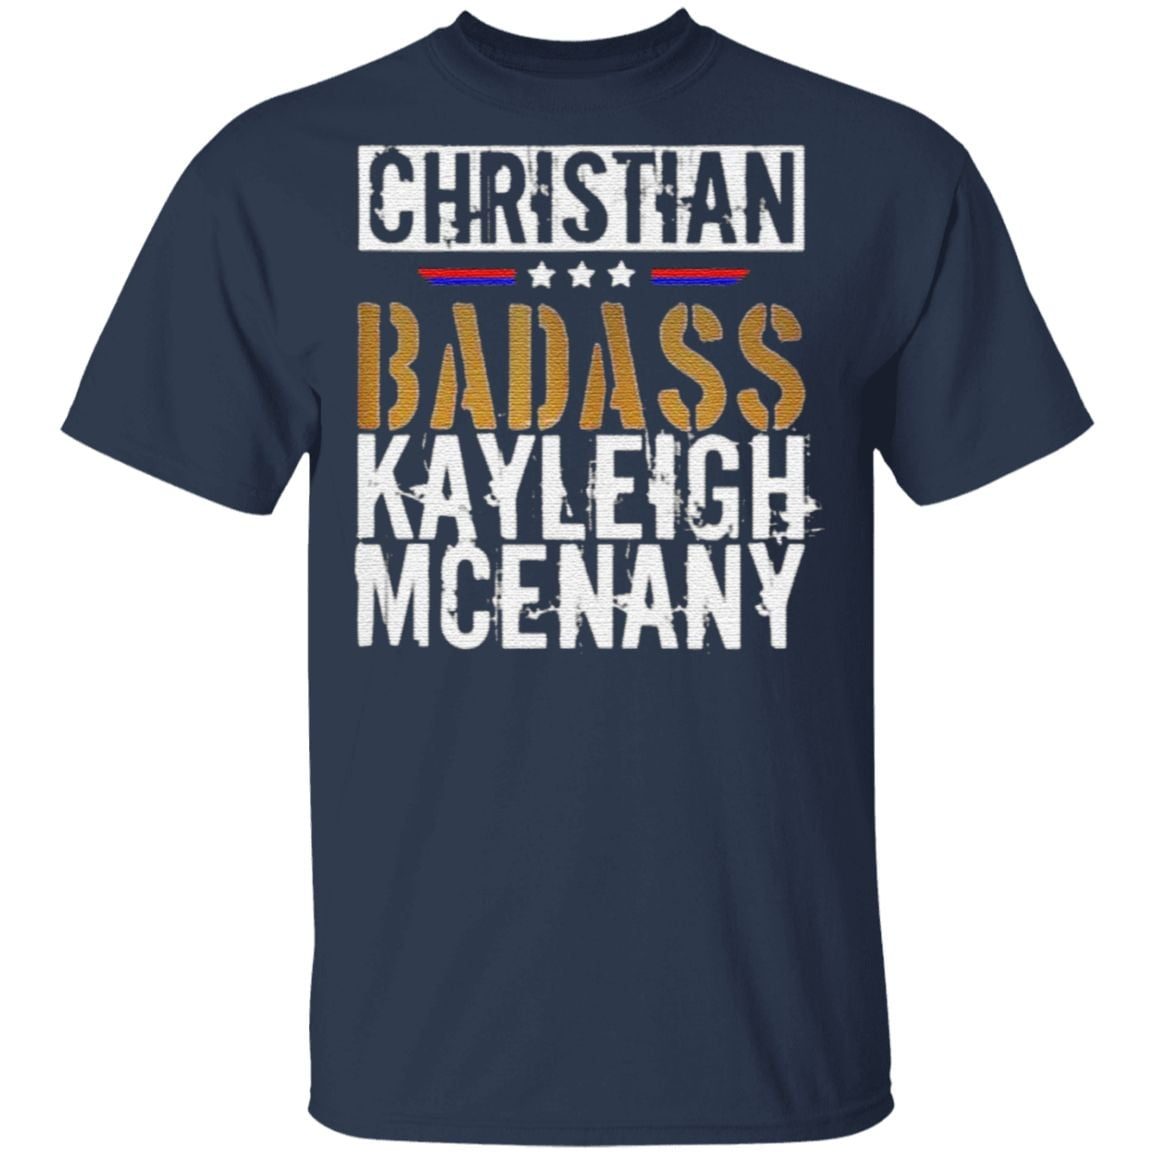 Christian Badass Kayleigh Mcenany t shirt